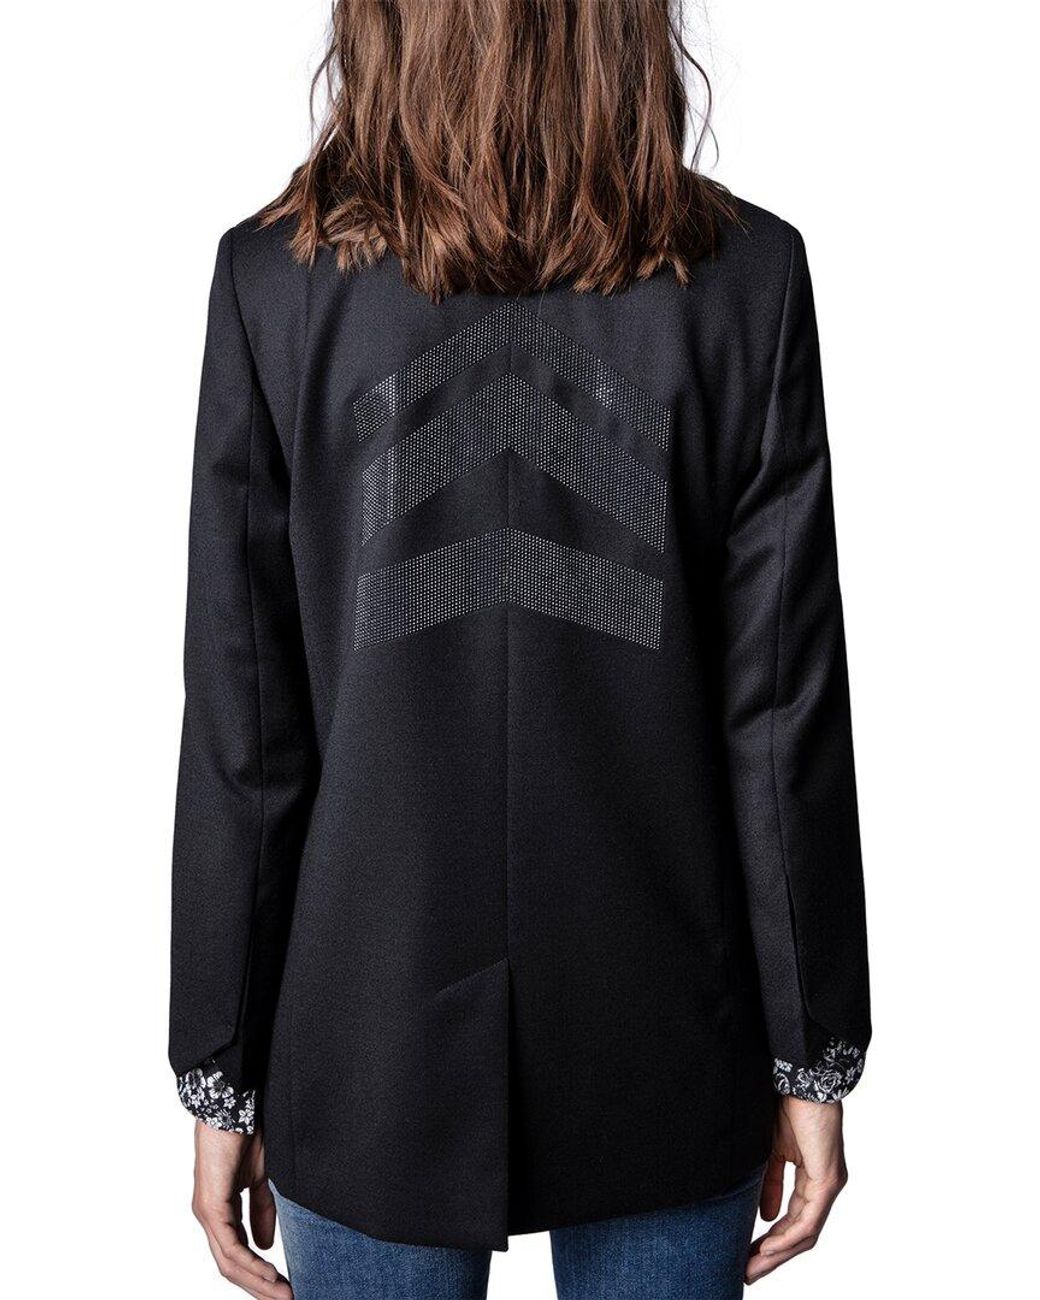 Zadig & Voltaire Viva Army Veste Wool Blazer in Black | Lyst